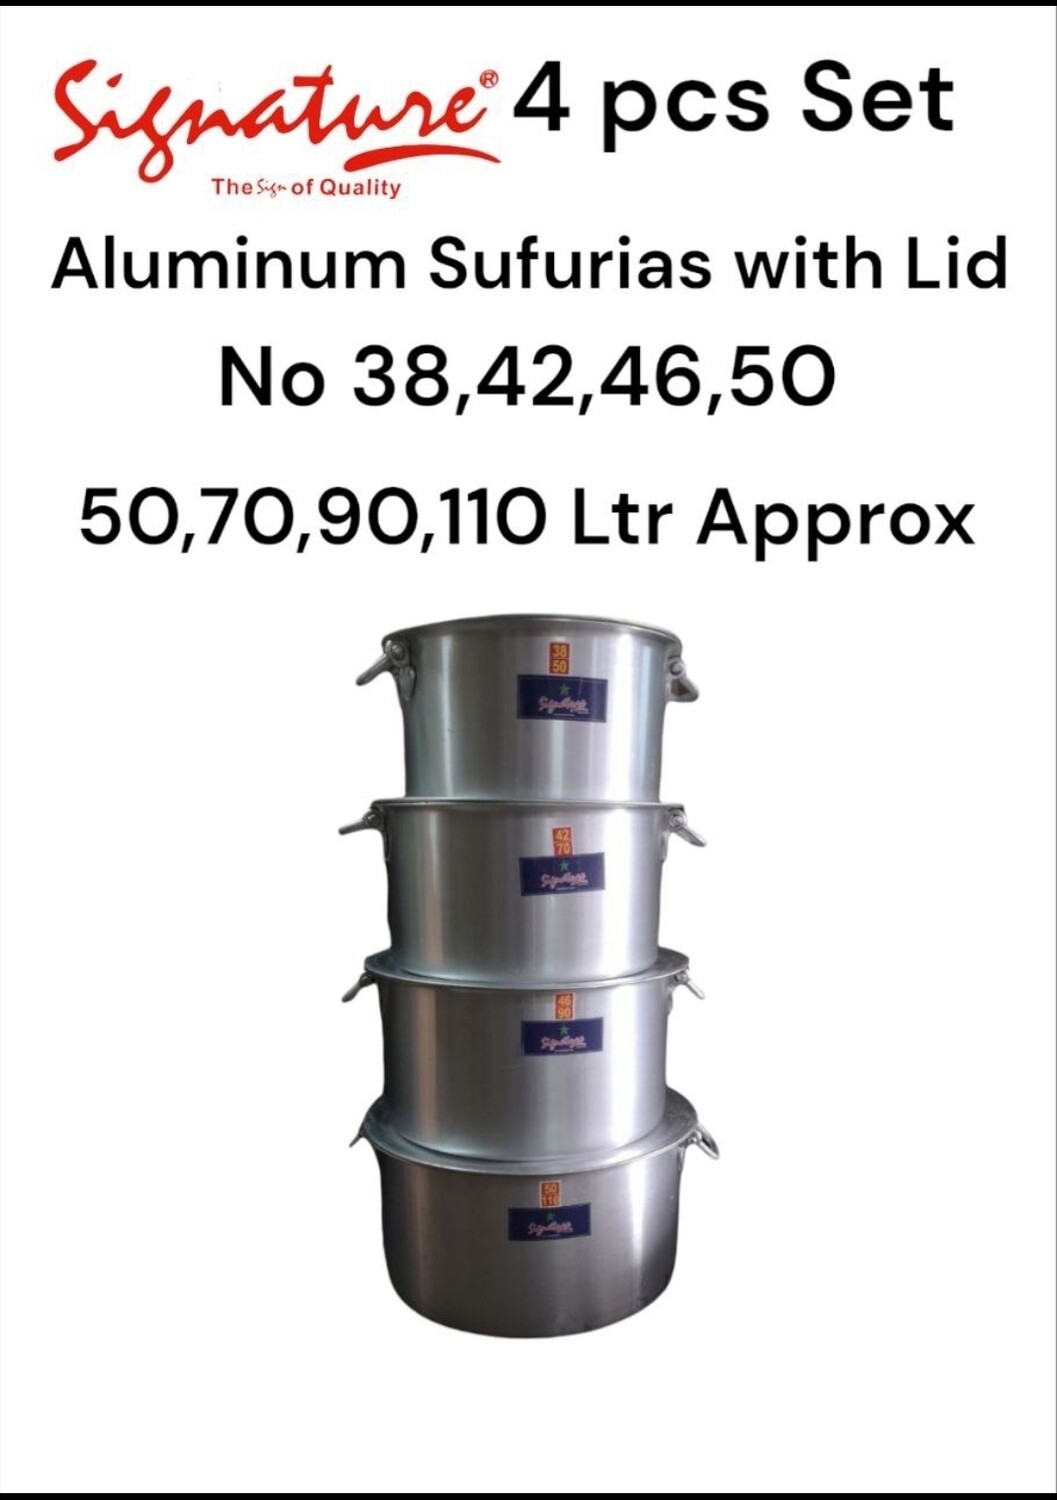 Signature Heavy duty aluminium sufurias with lids & handles 4pcs set [50 70 90 &110 Litres]